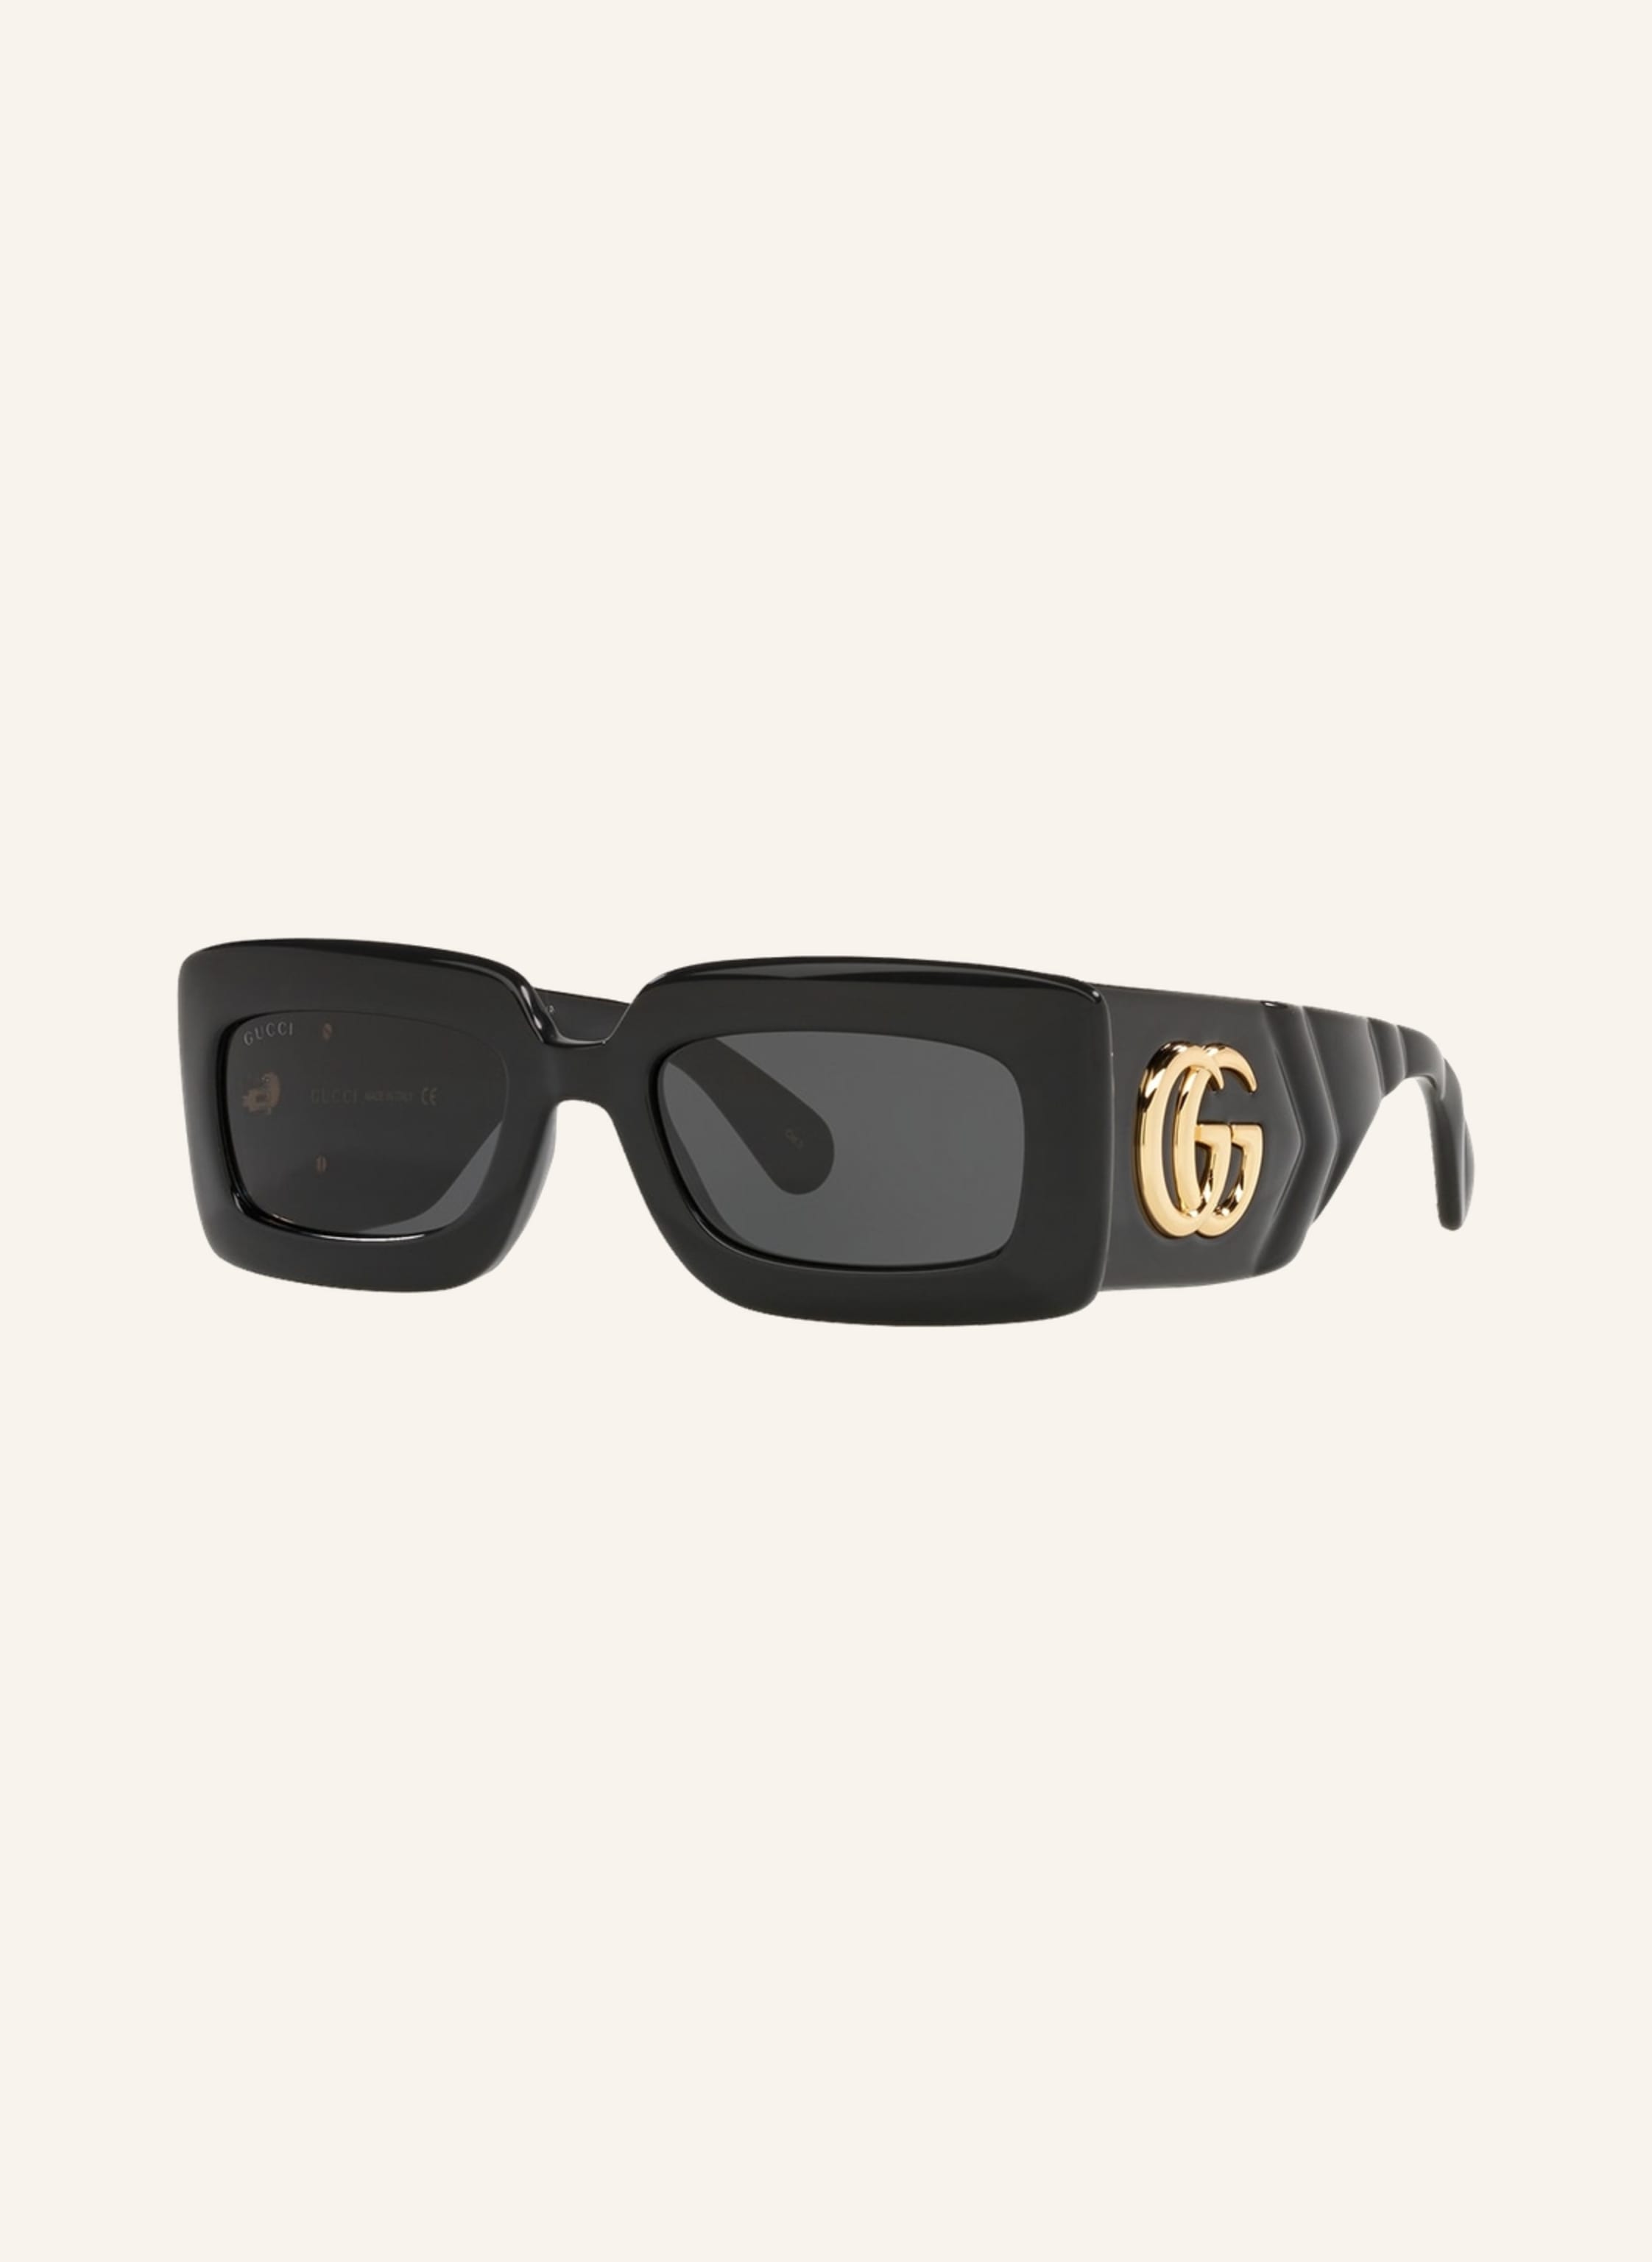 GUCCI Sunglasses GC001490 in 1330l1 - black/ gray | Breuninger